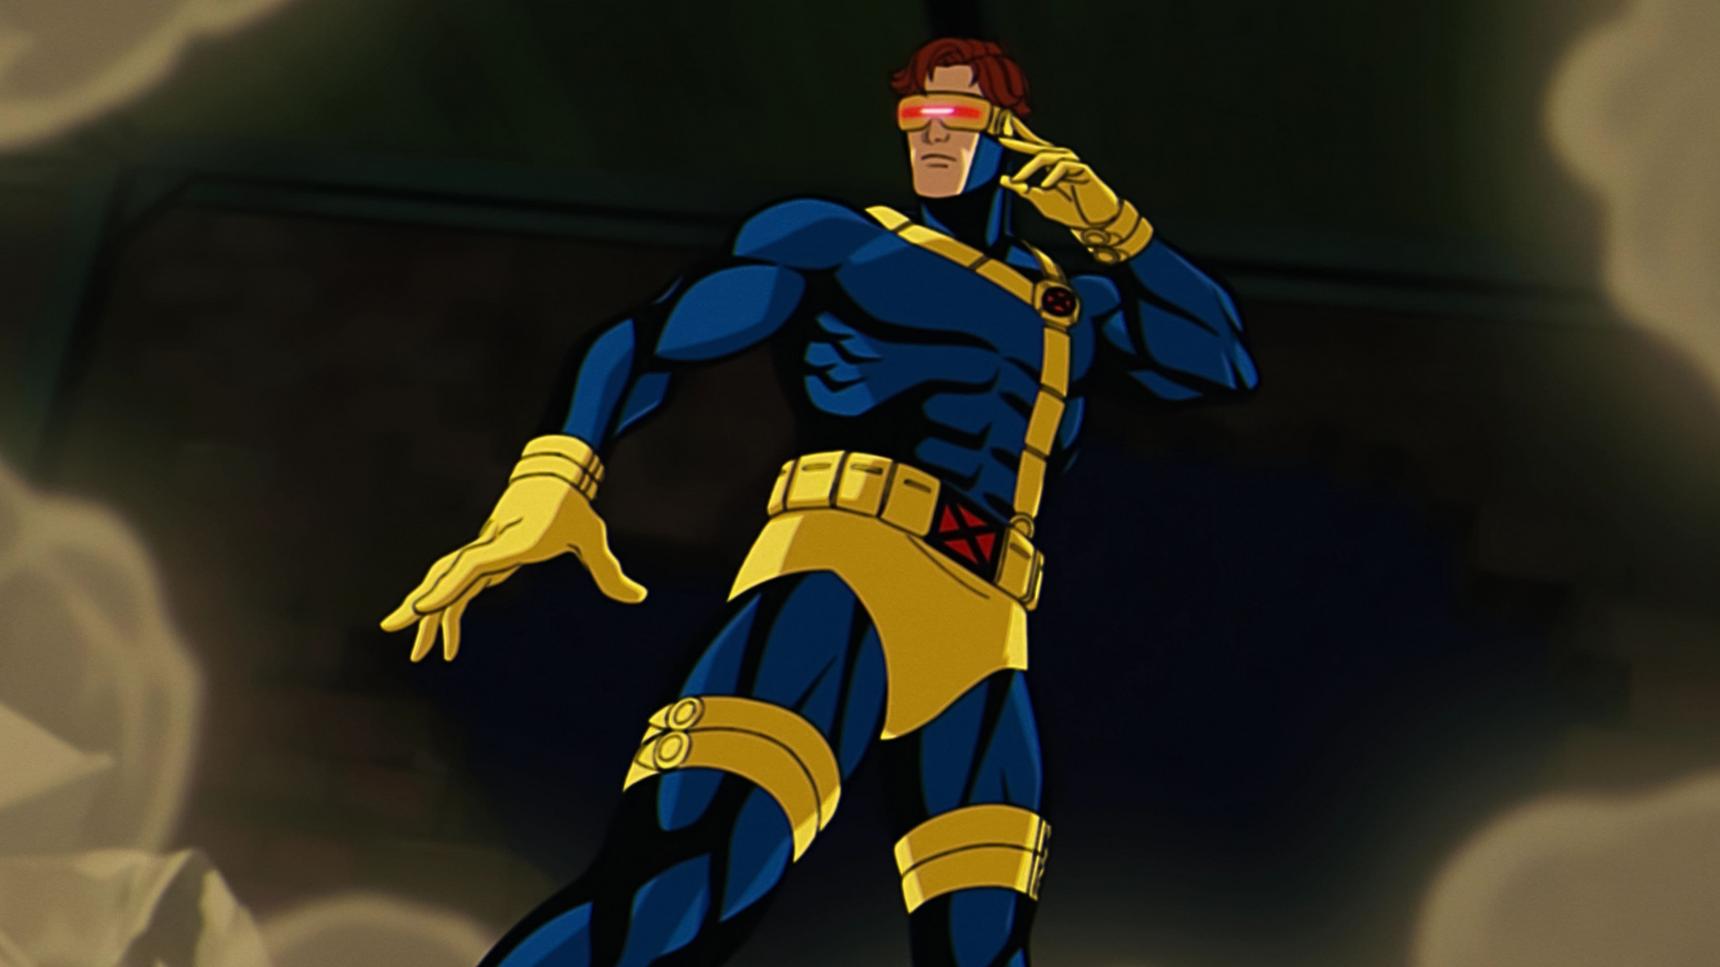 Poster del episodio 1 de X-Men '97 online